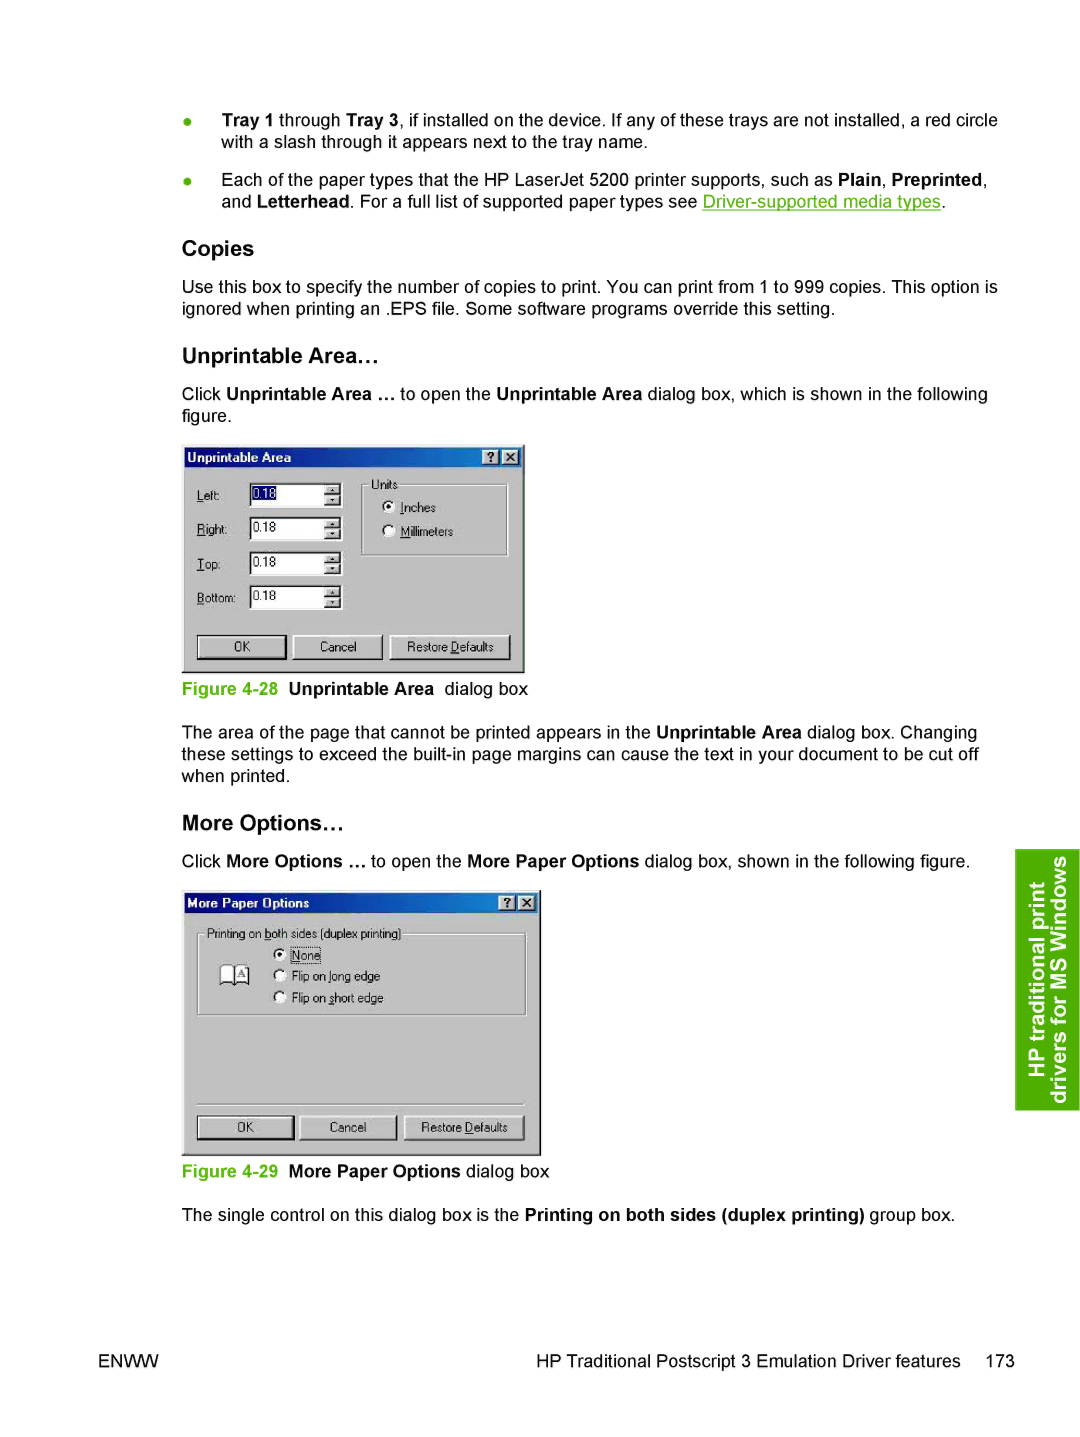 HP 5200L manual Copies, Unprintable Area…, More Options… 